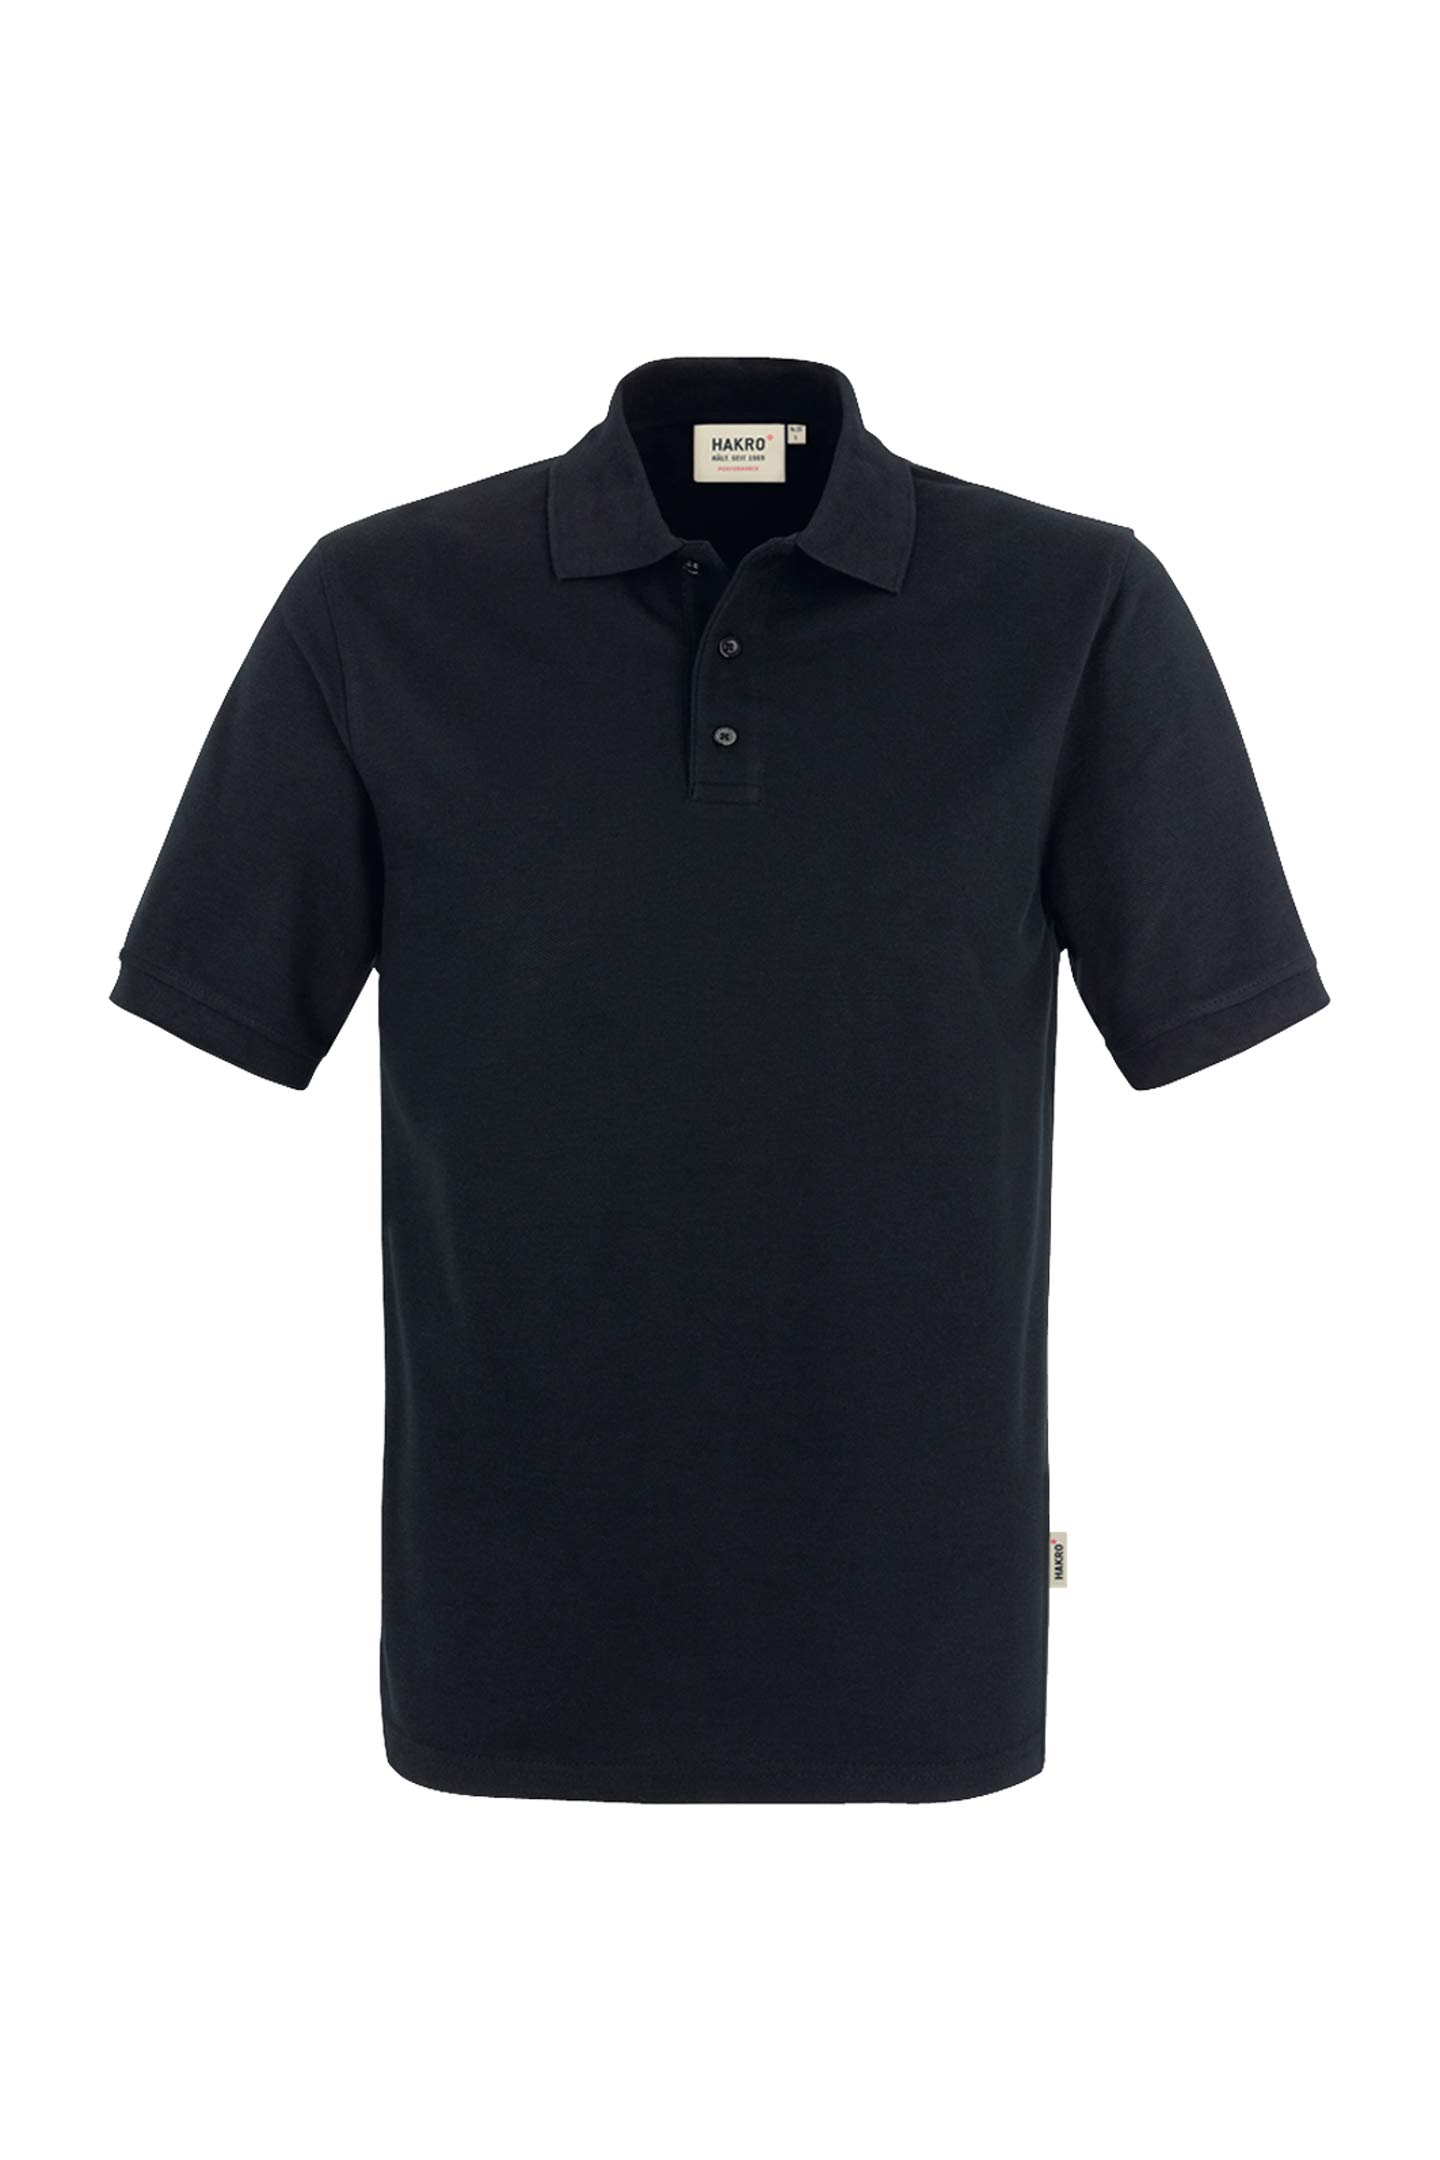 HAKRO Motoo Polo-Shirt schwarz Gr XL von HAKRO